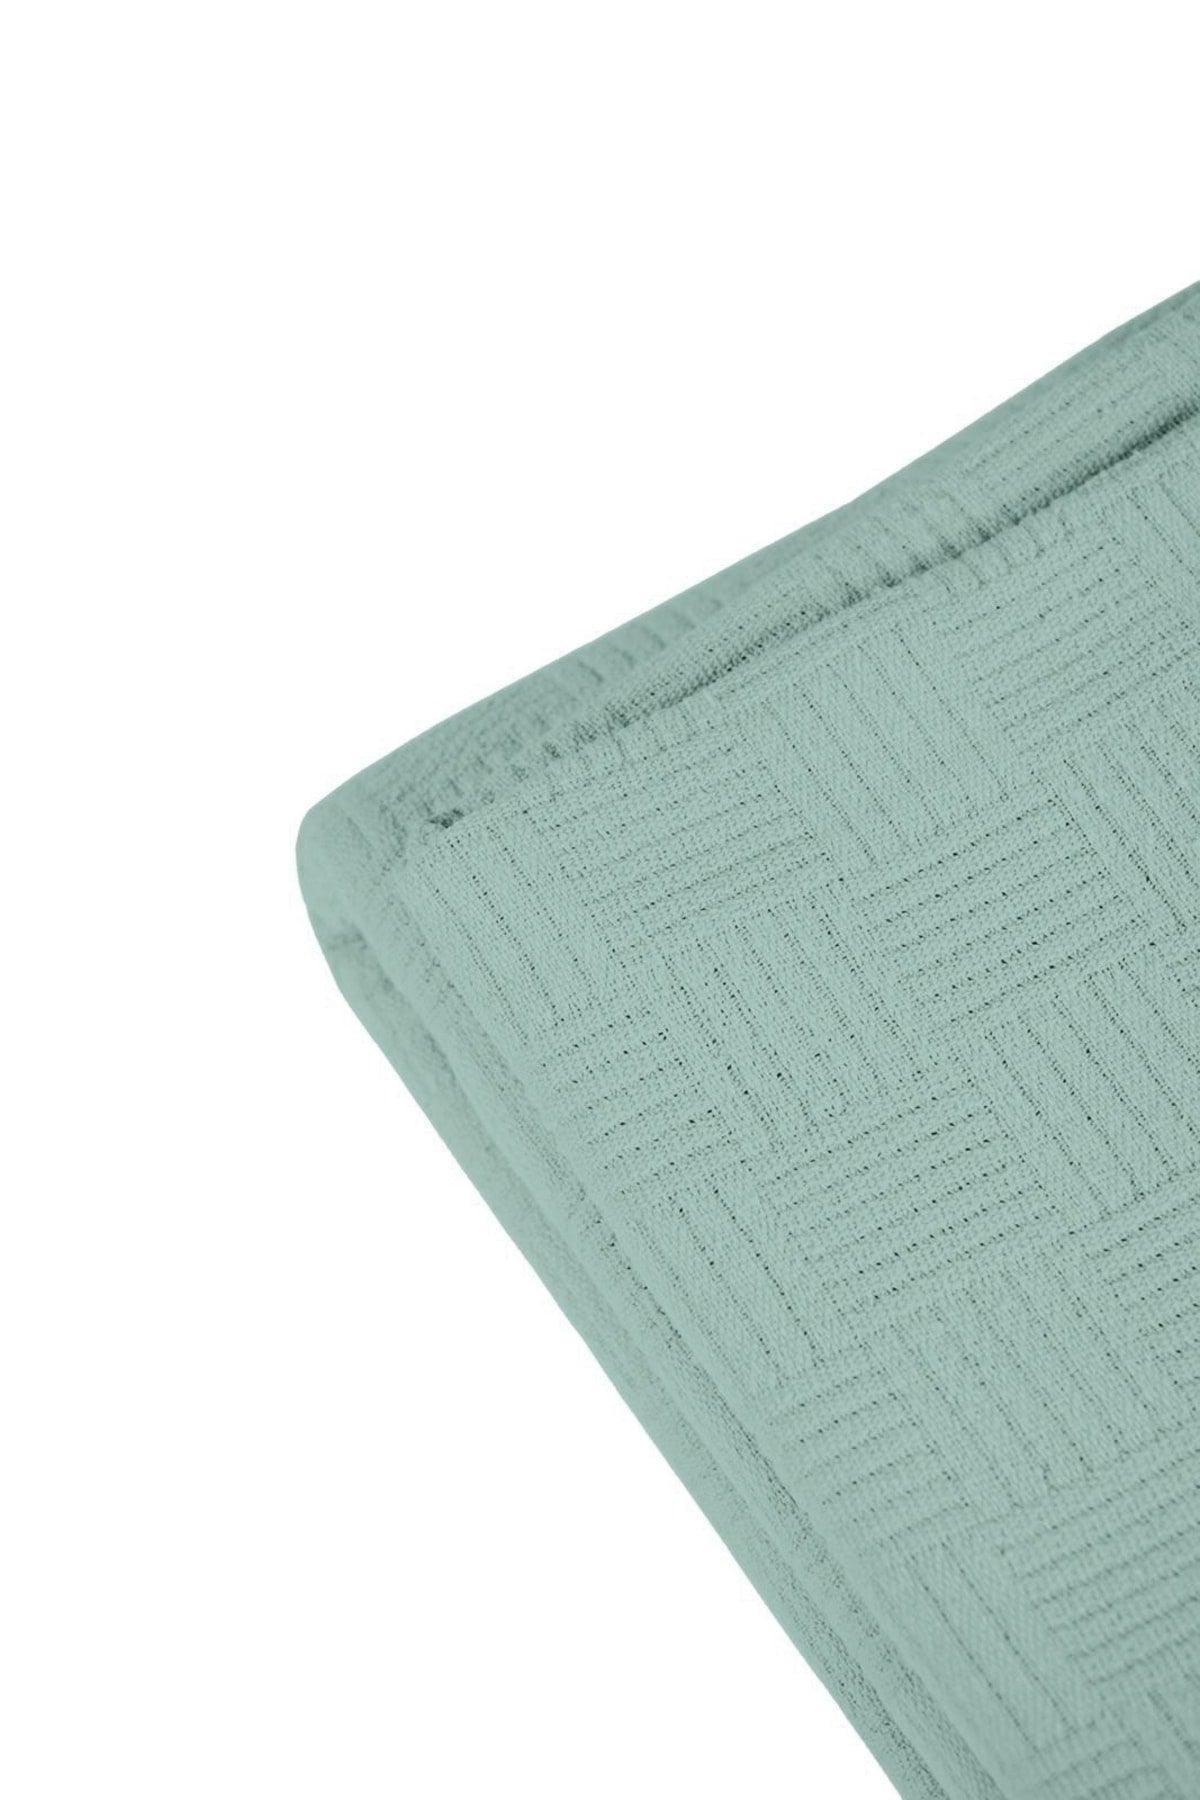 Checker Pattern Cotton Single Pique And Bedspread -Light Mint Green - Swordslife